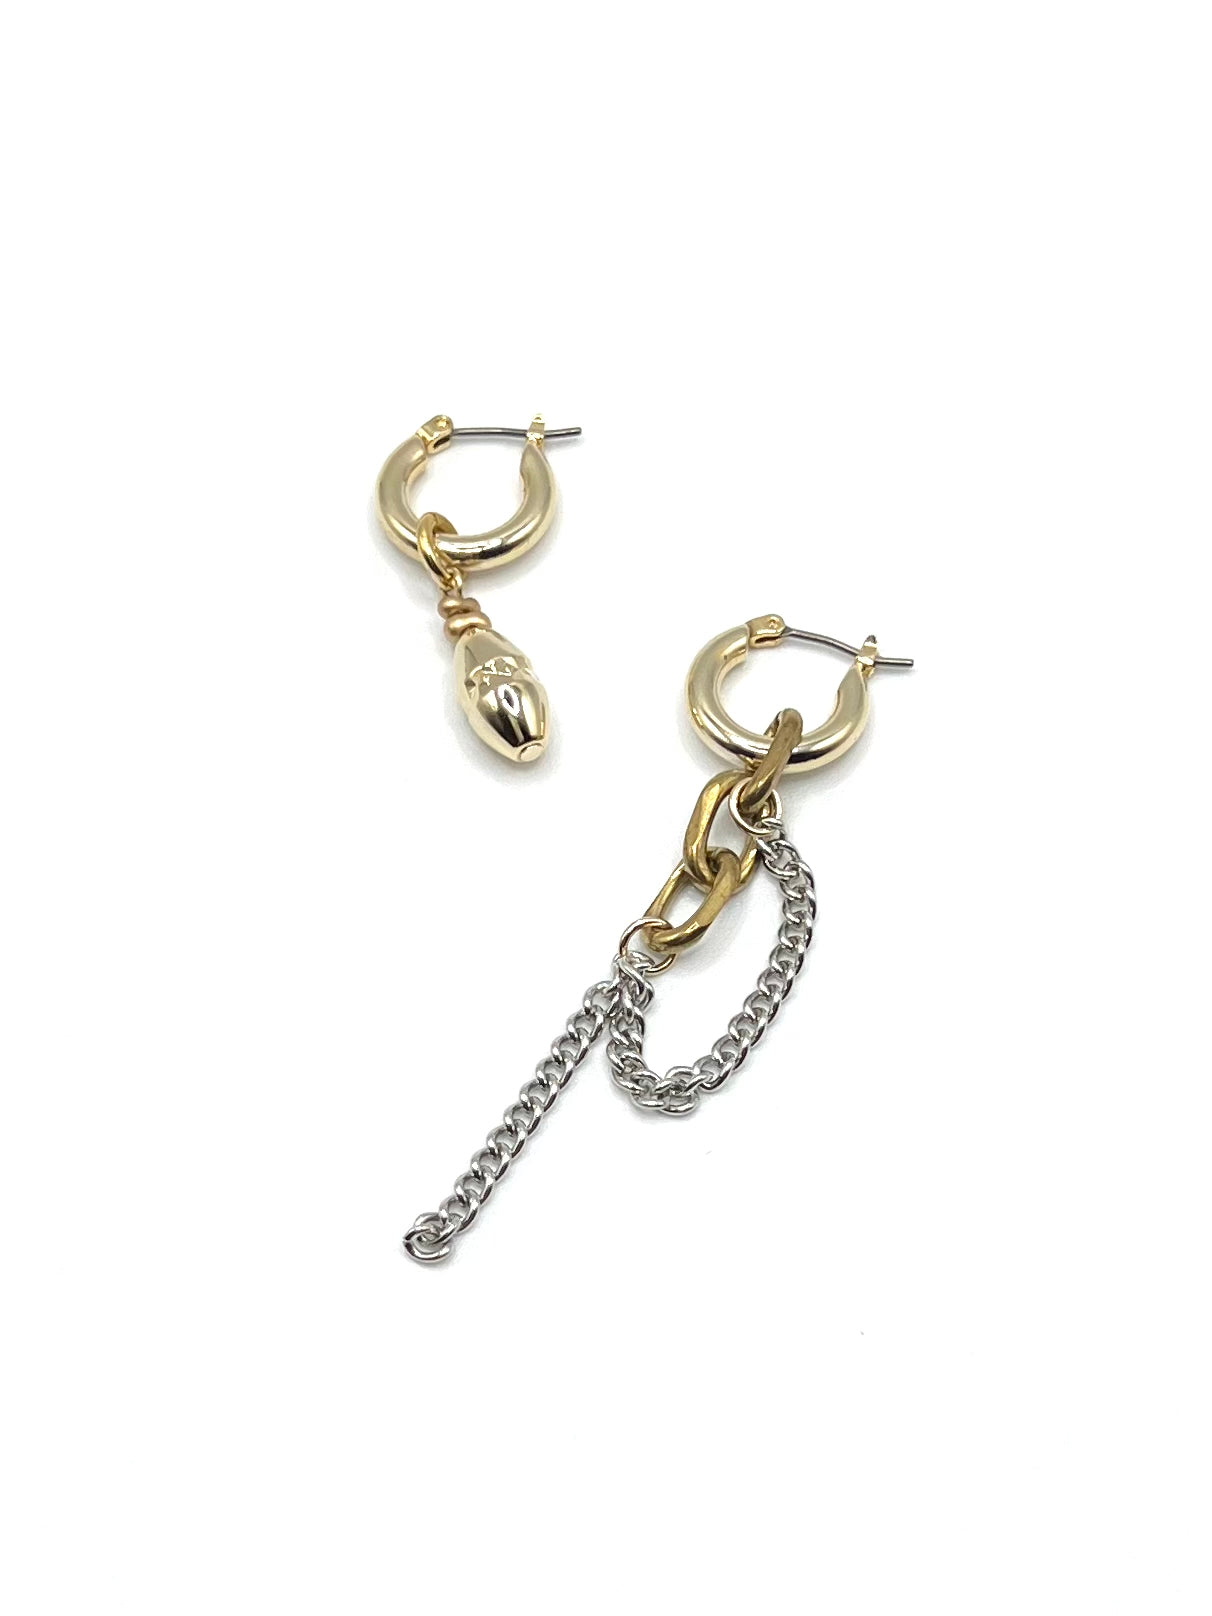 Chain combination pierce - Swing